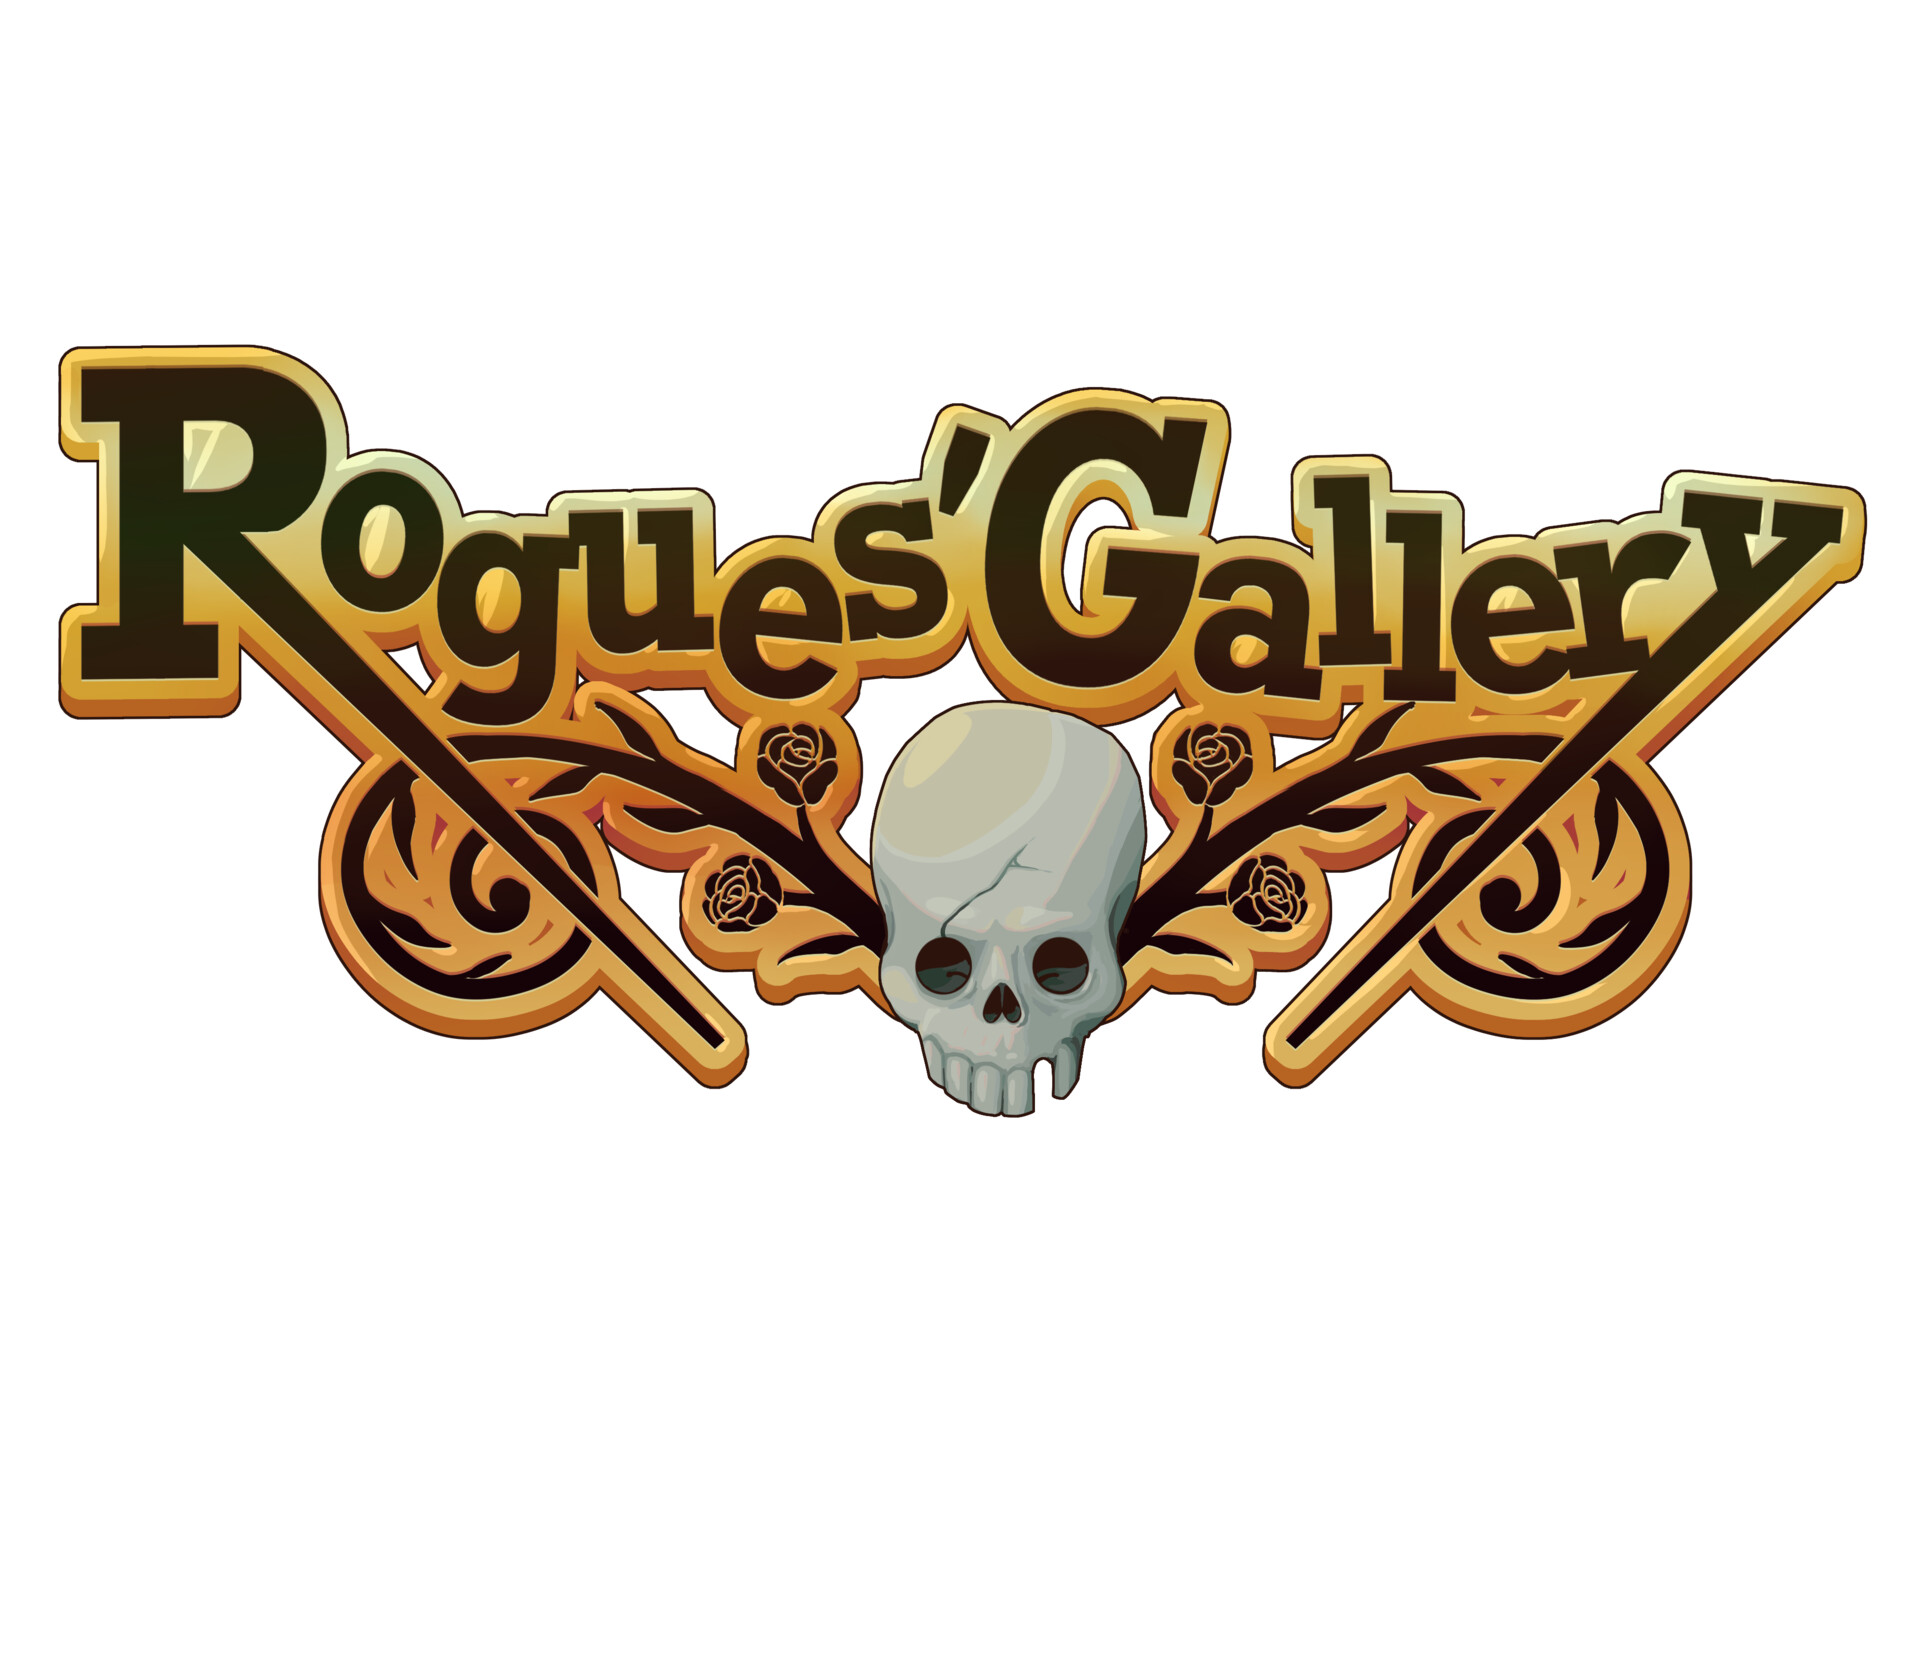 ArtStation - Rogues Gallery - Logo